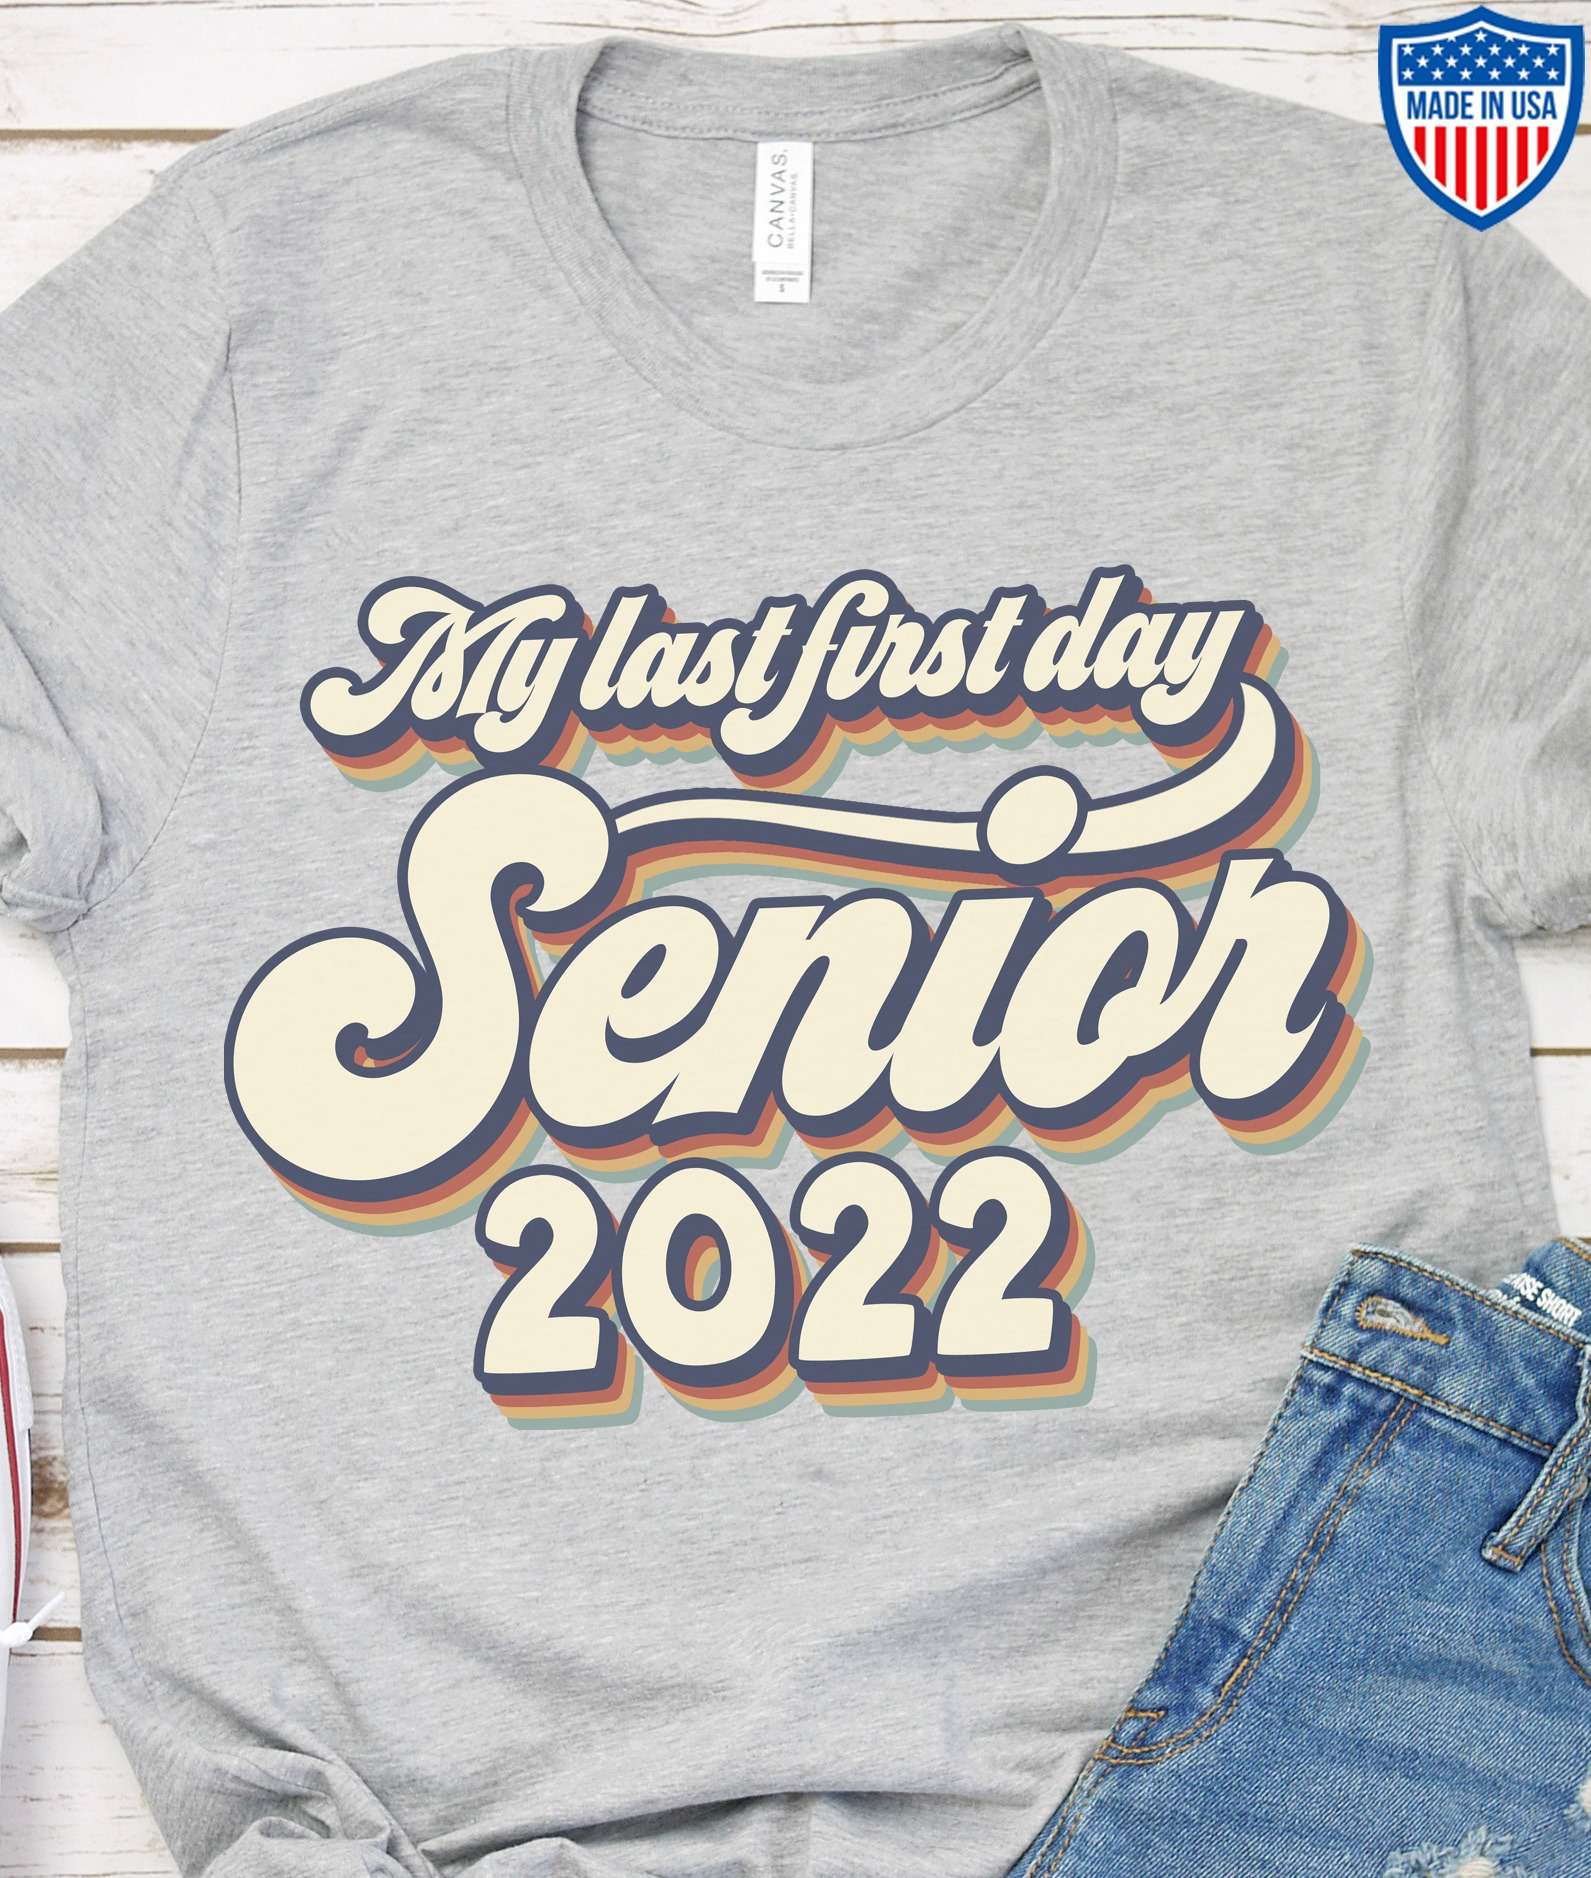 My last first day - Senior 2022, Student 2022